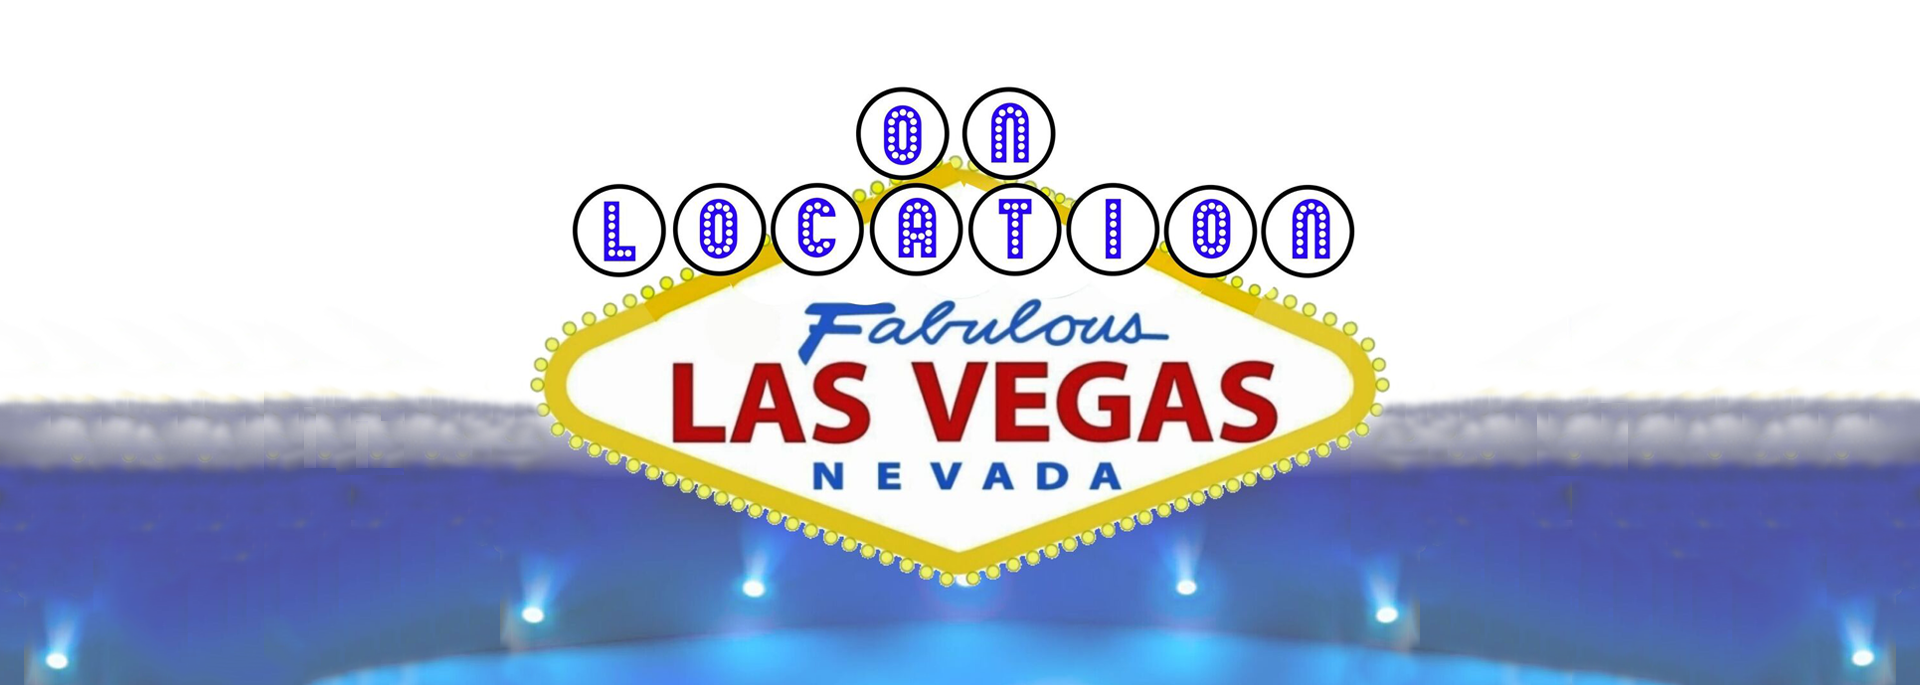 On Location: Las Vegas channel